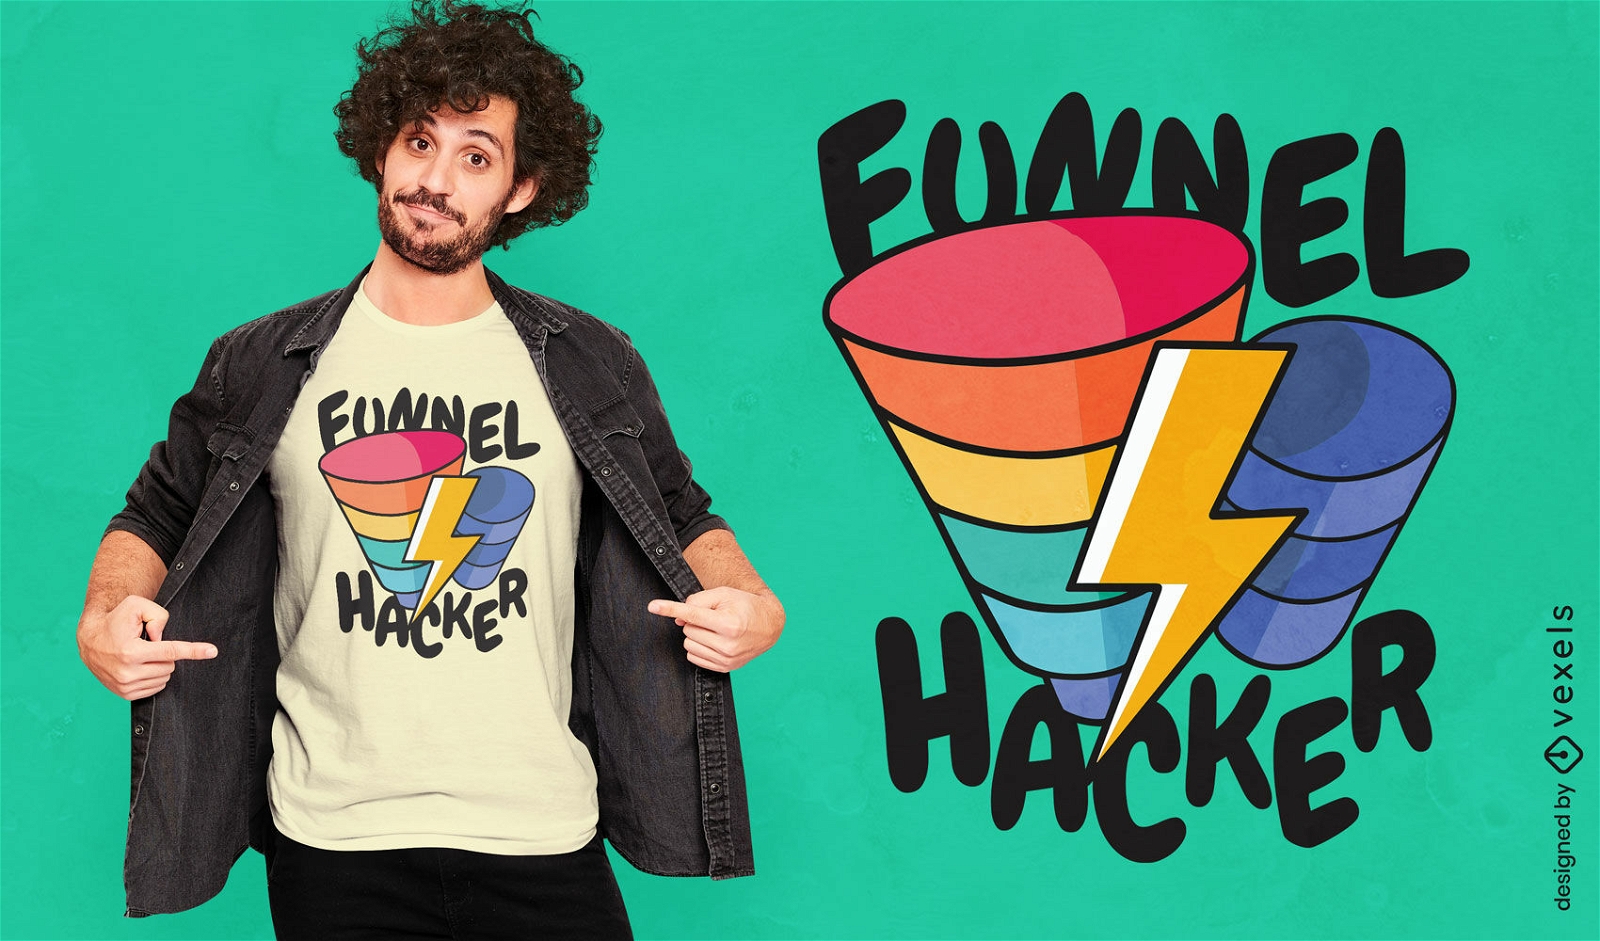 Trichter-Hacker-Verkaufswitz-T-Shirt-Design